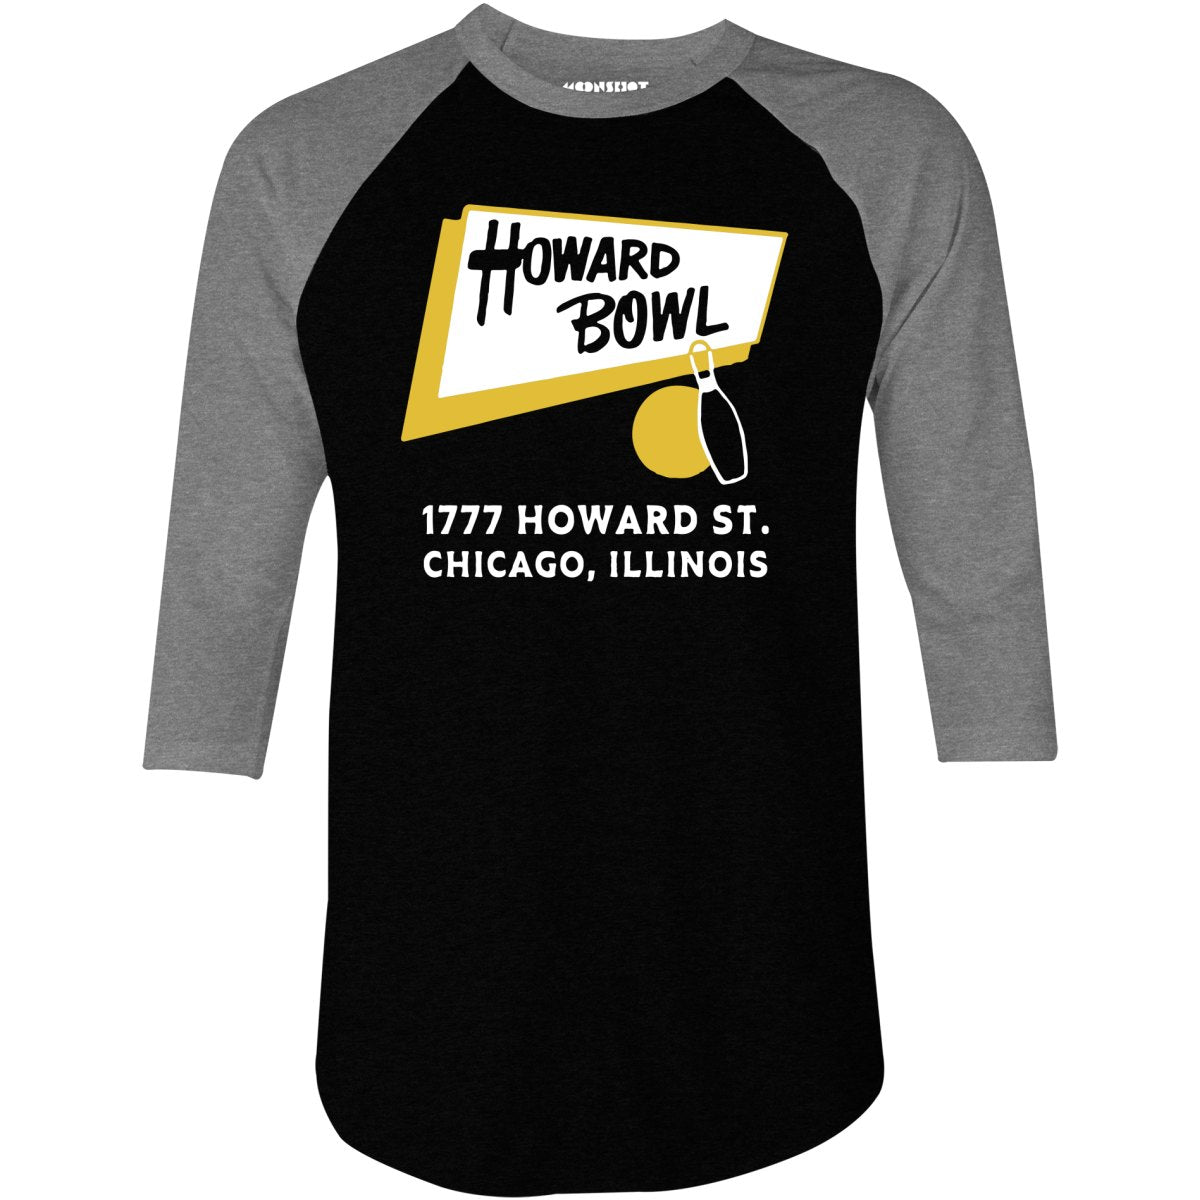 Howard Bowl - Chicago, IL - Vintage Bowling Alley - 3/4 Sleeve Raglan T-Shirt